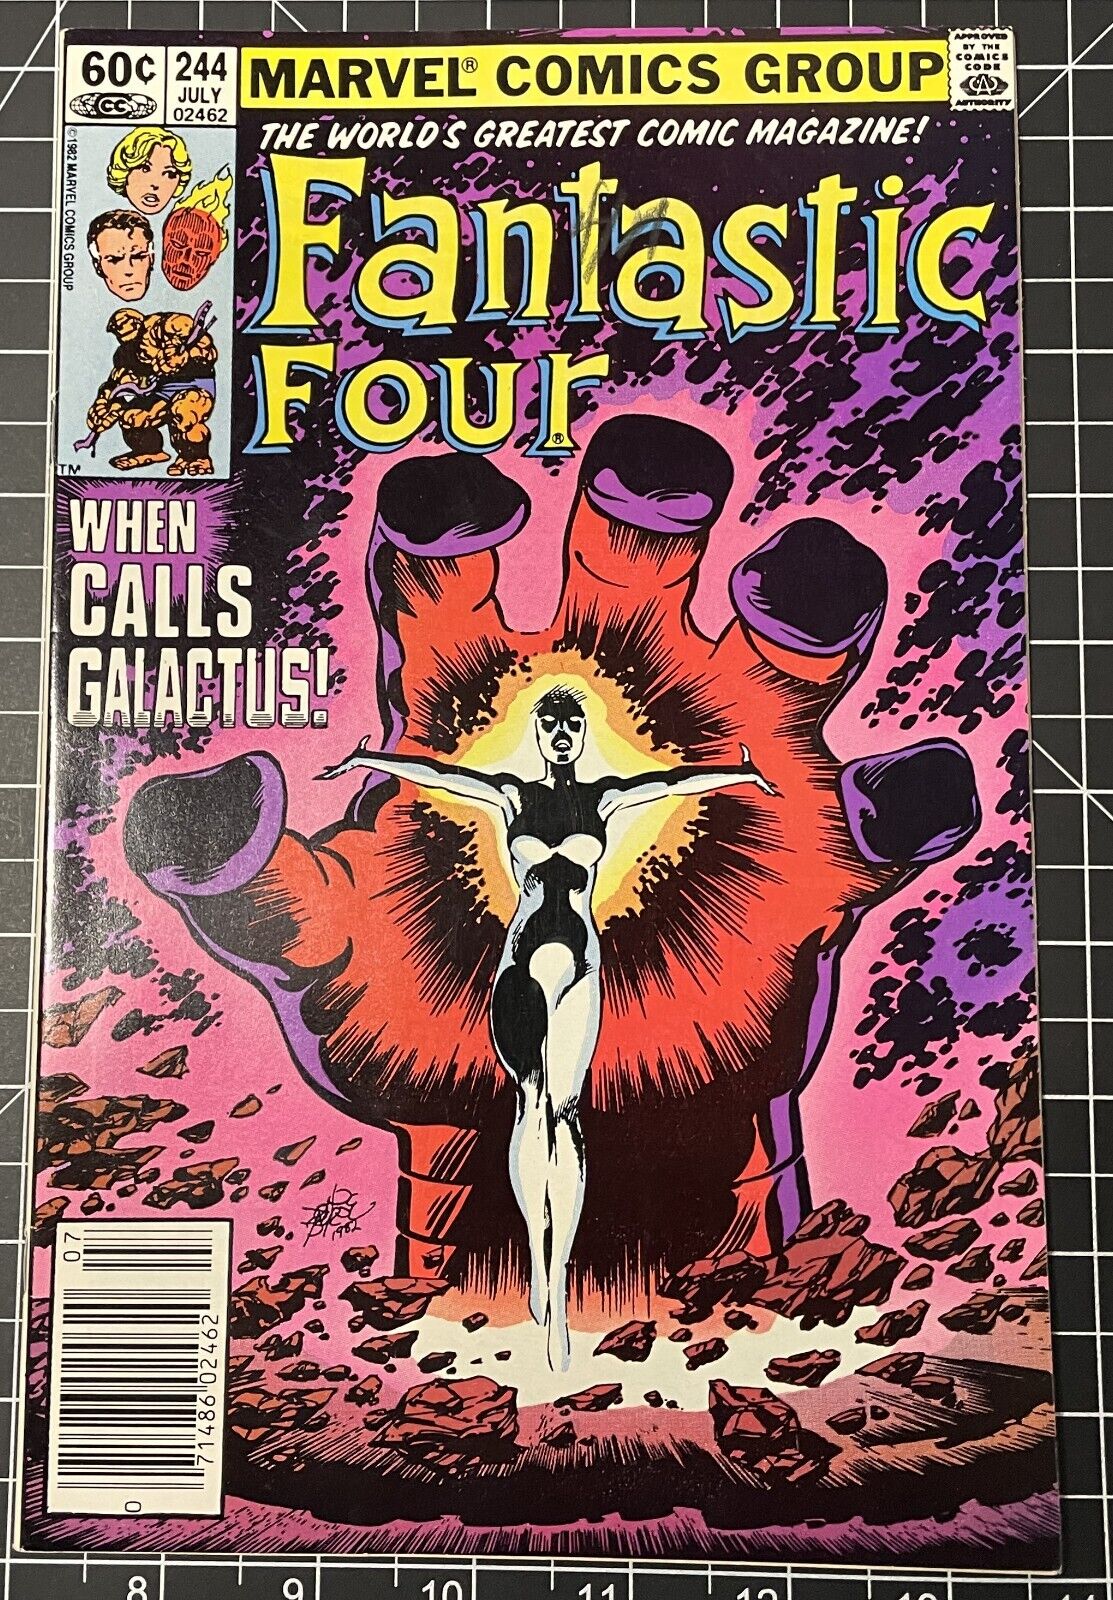 FANTASTIC FOUR #244. 1982 Key. Frankie Ray becomes Nova, Herald of Galactus